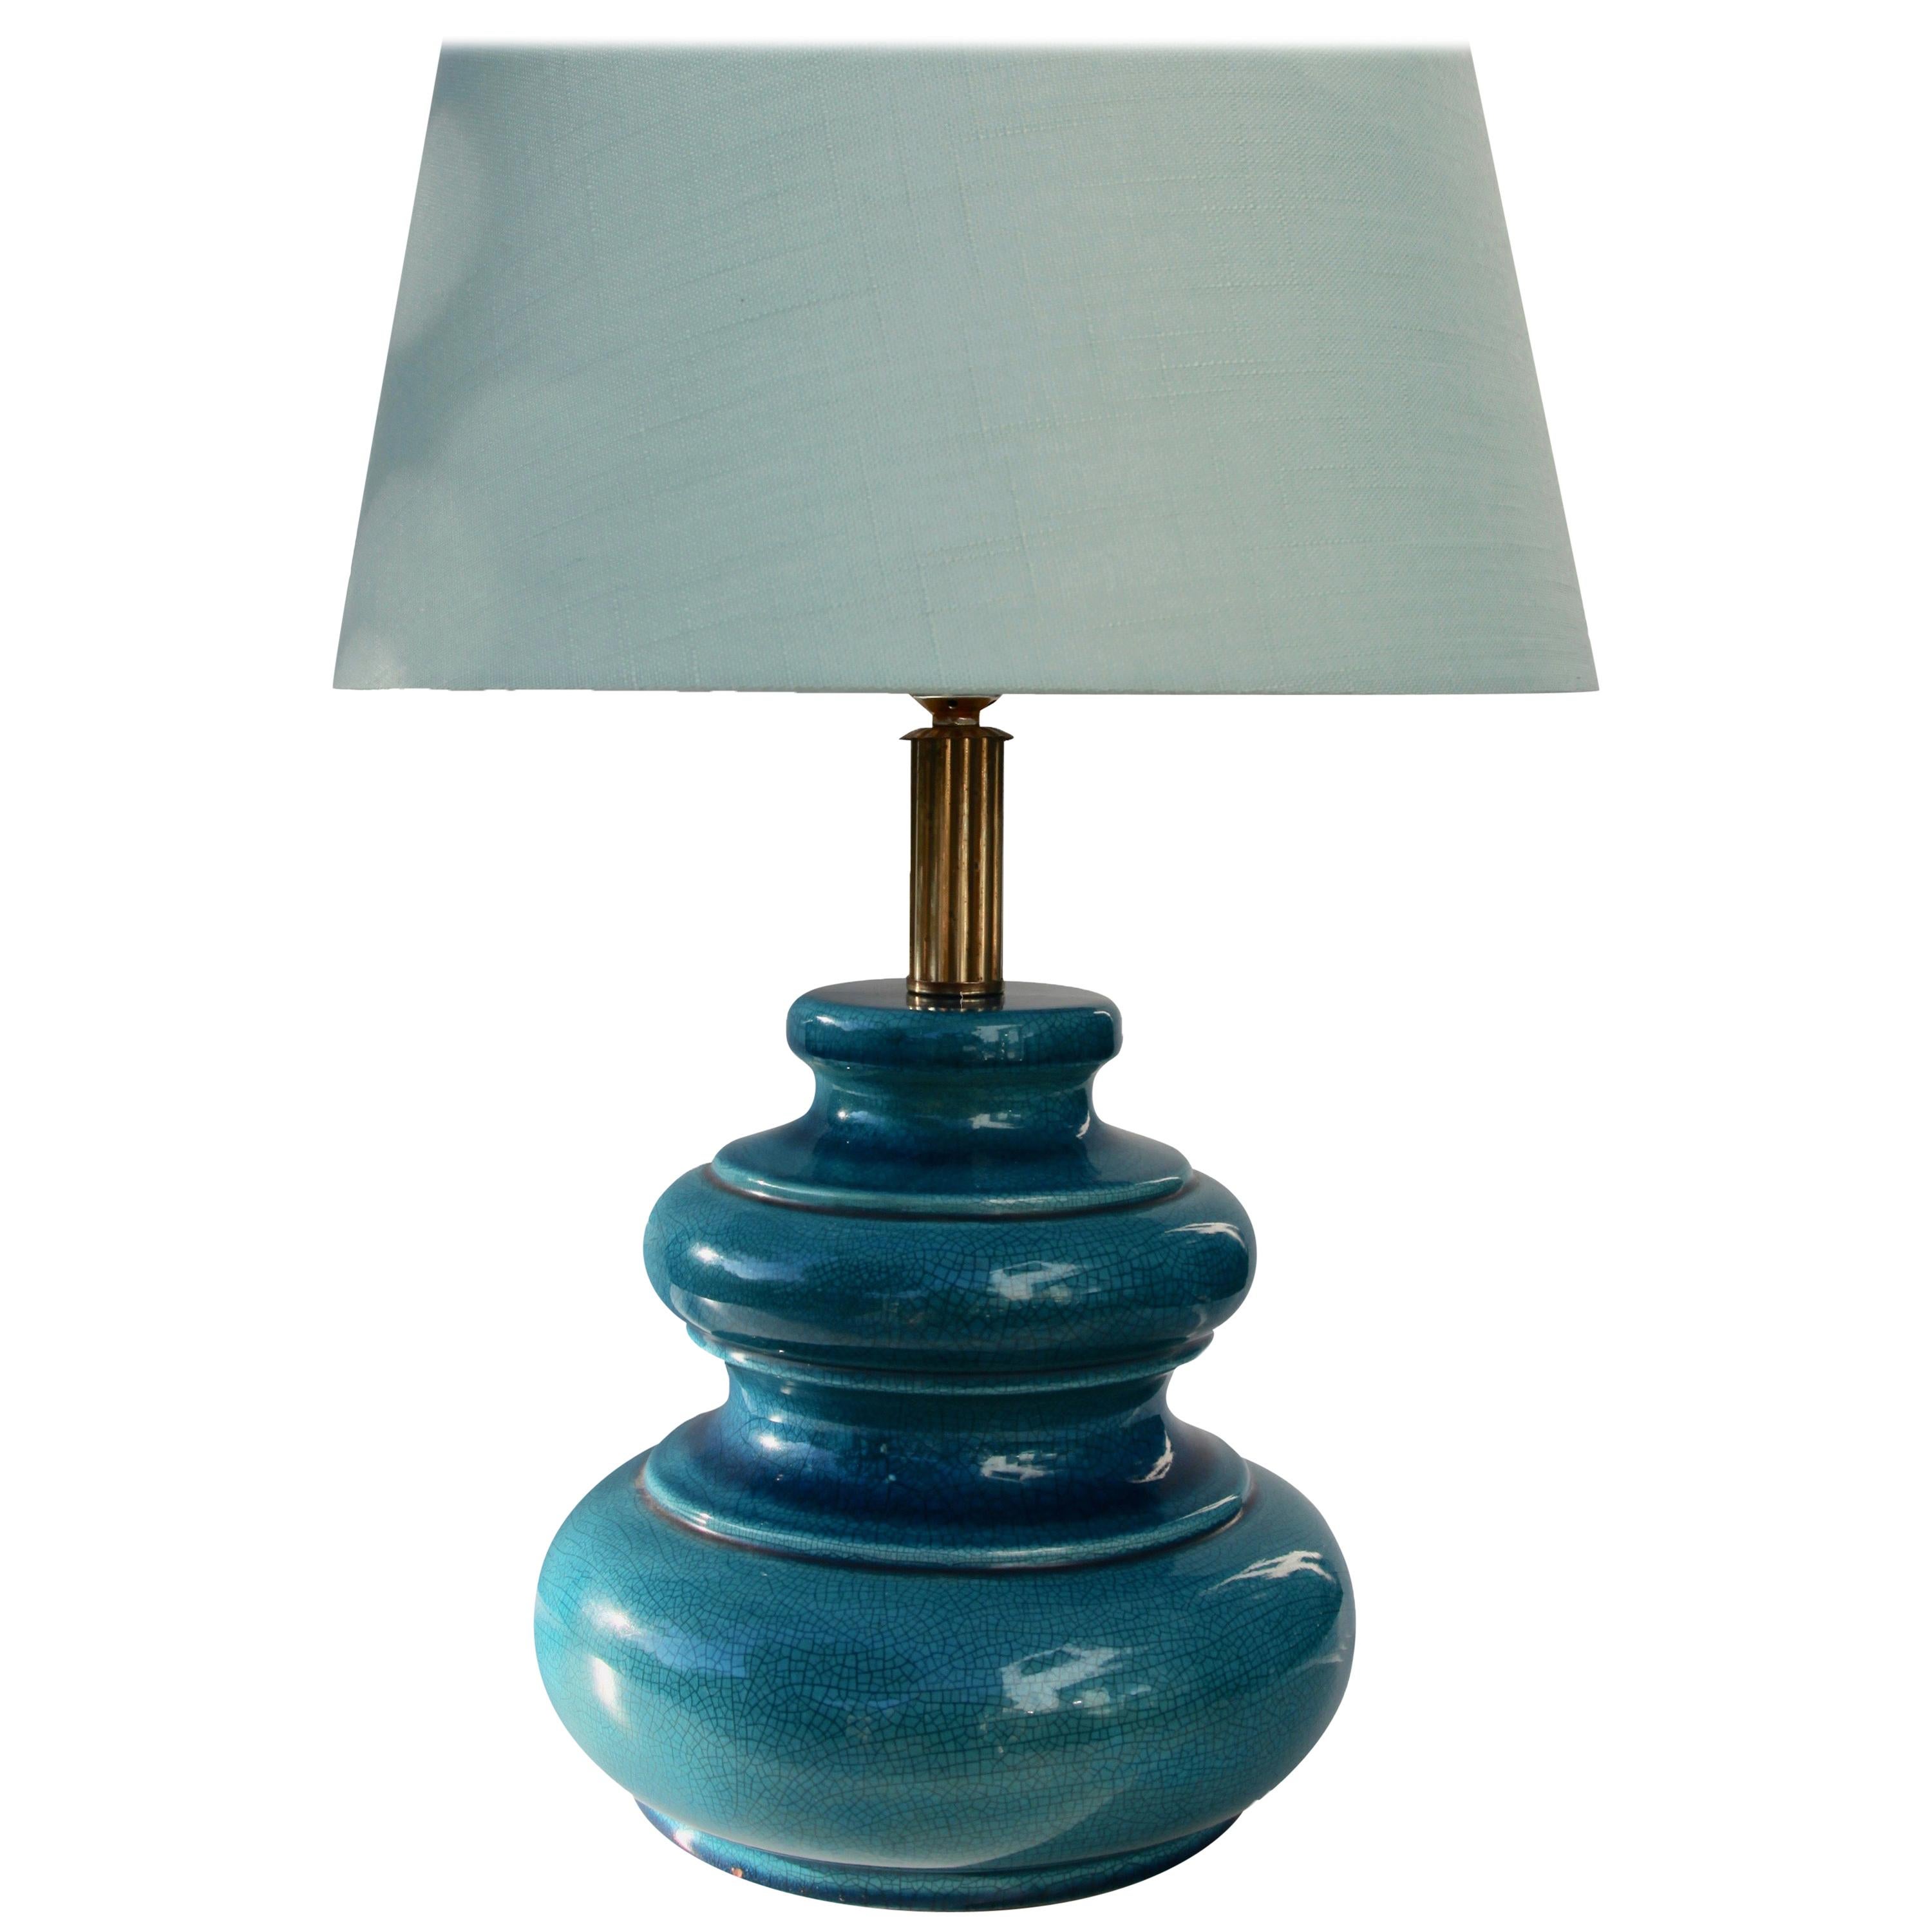 Vibrant Turquoise Ceramic Celadon Table Lamp with Fine Crackle Glaze